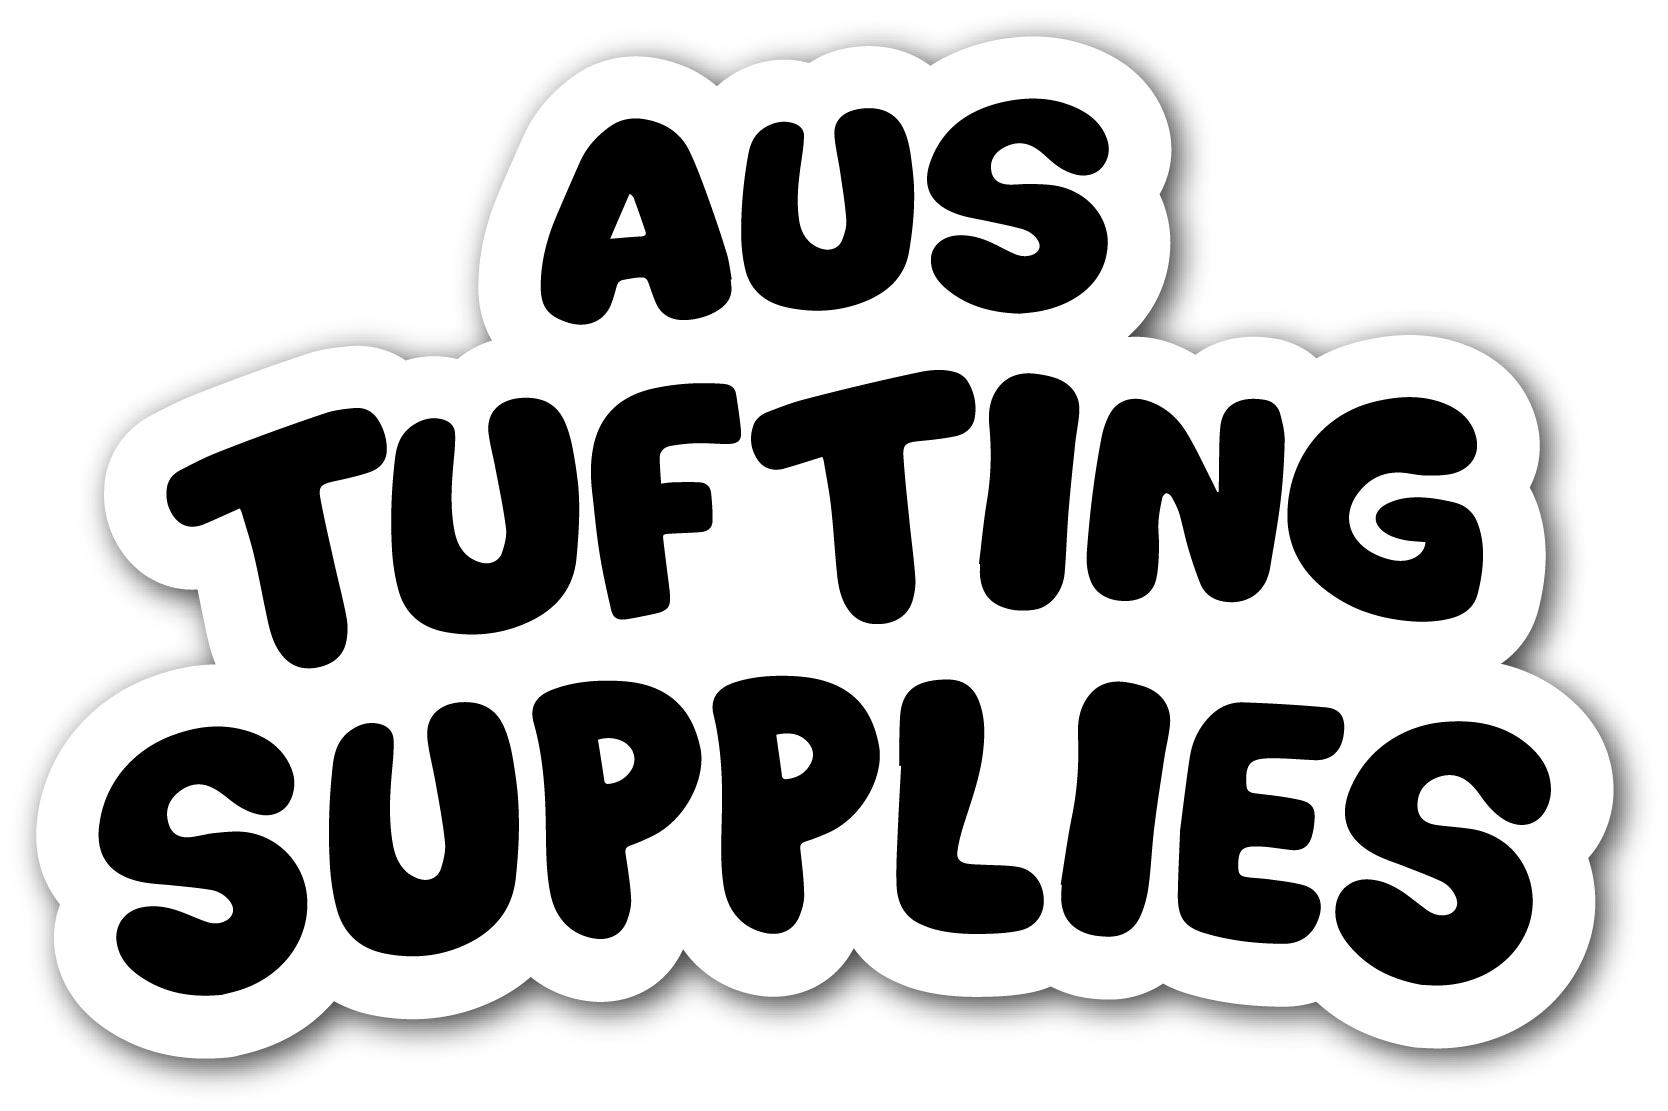 Premium Rug Tufting Machines & Supplies – Aus Tufting Supplies